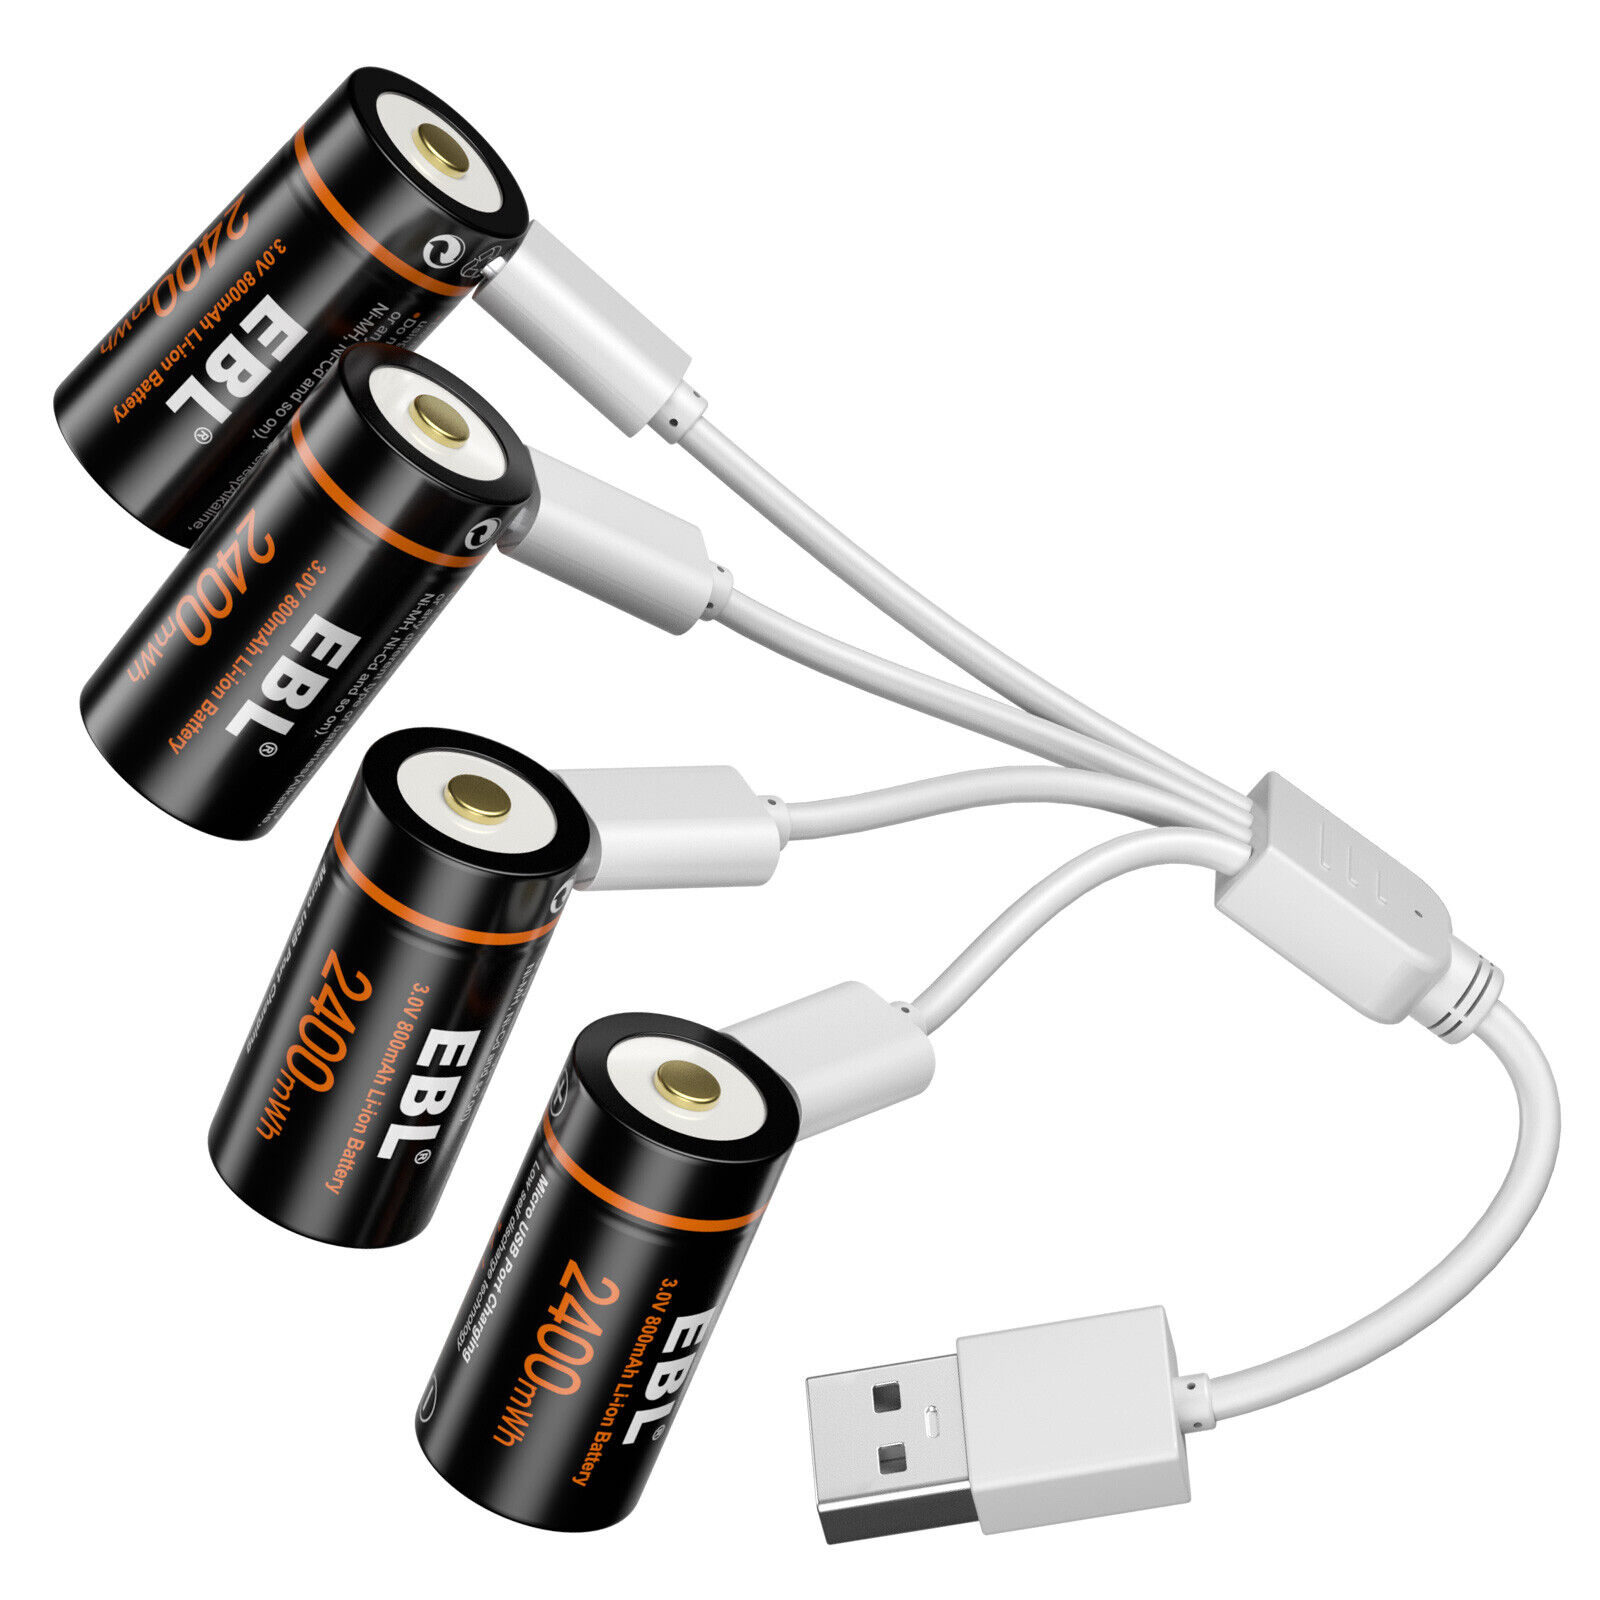 4x 16340 RCR123 CR123A 123 3V USB Lithium Li-ion Rechargeable Batteries w/Cable EBL CR123